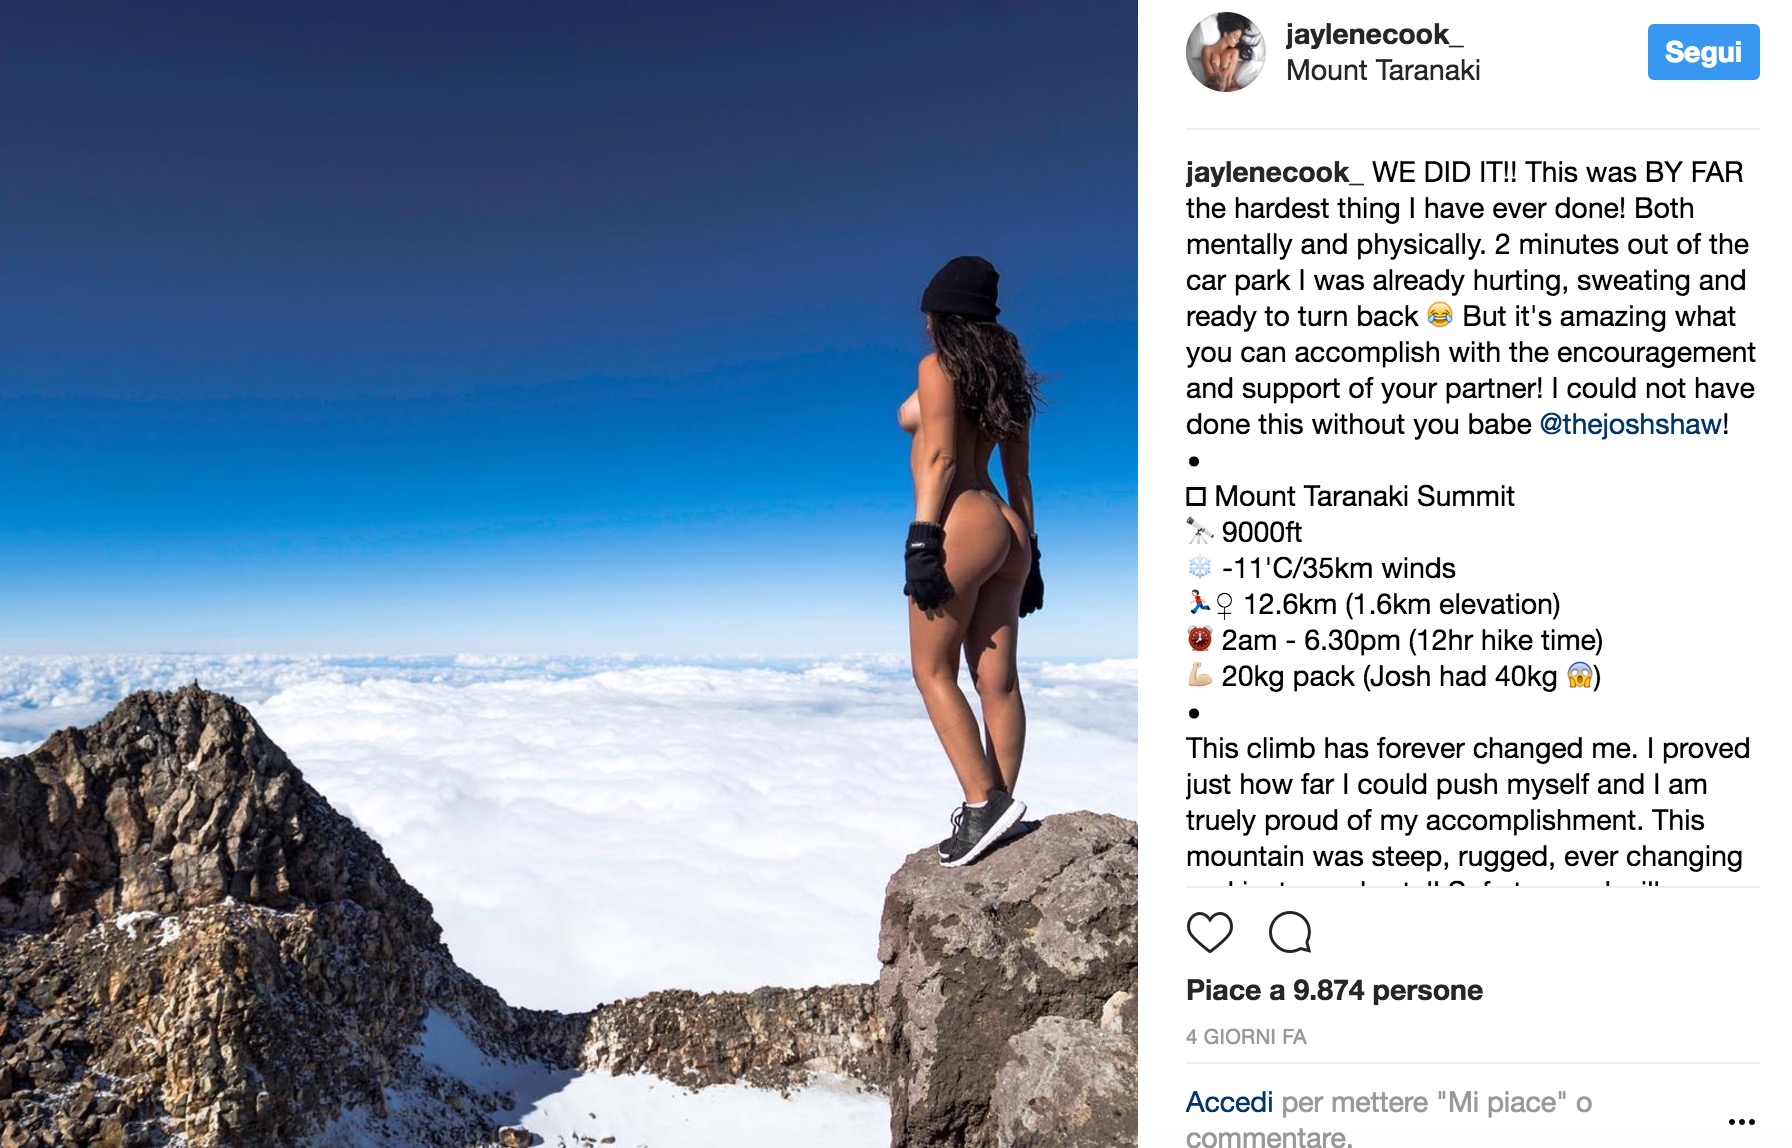 Jaylene Cook, coniglietta di Playboy, nuda sul Taranaki, monte sacro FOTO. E i maori...